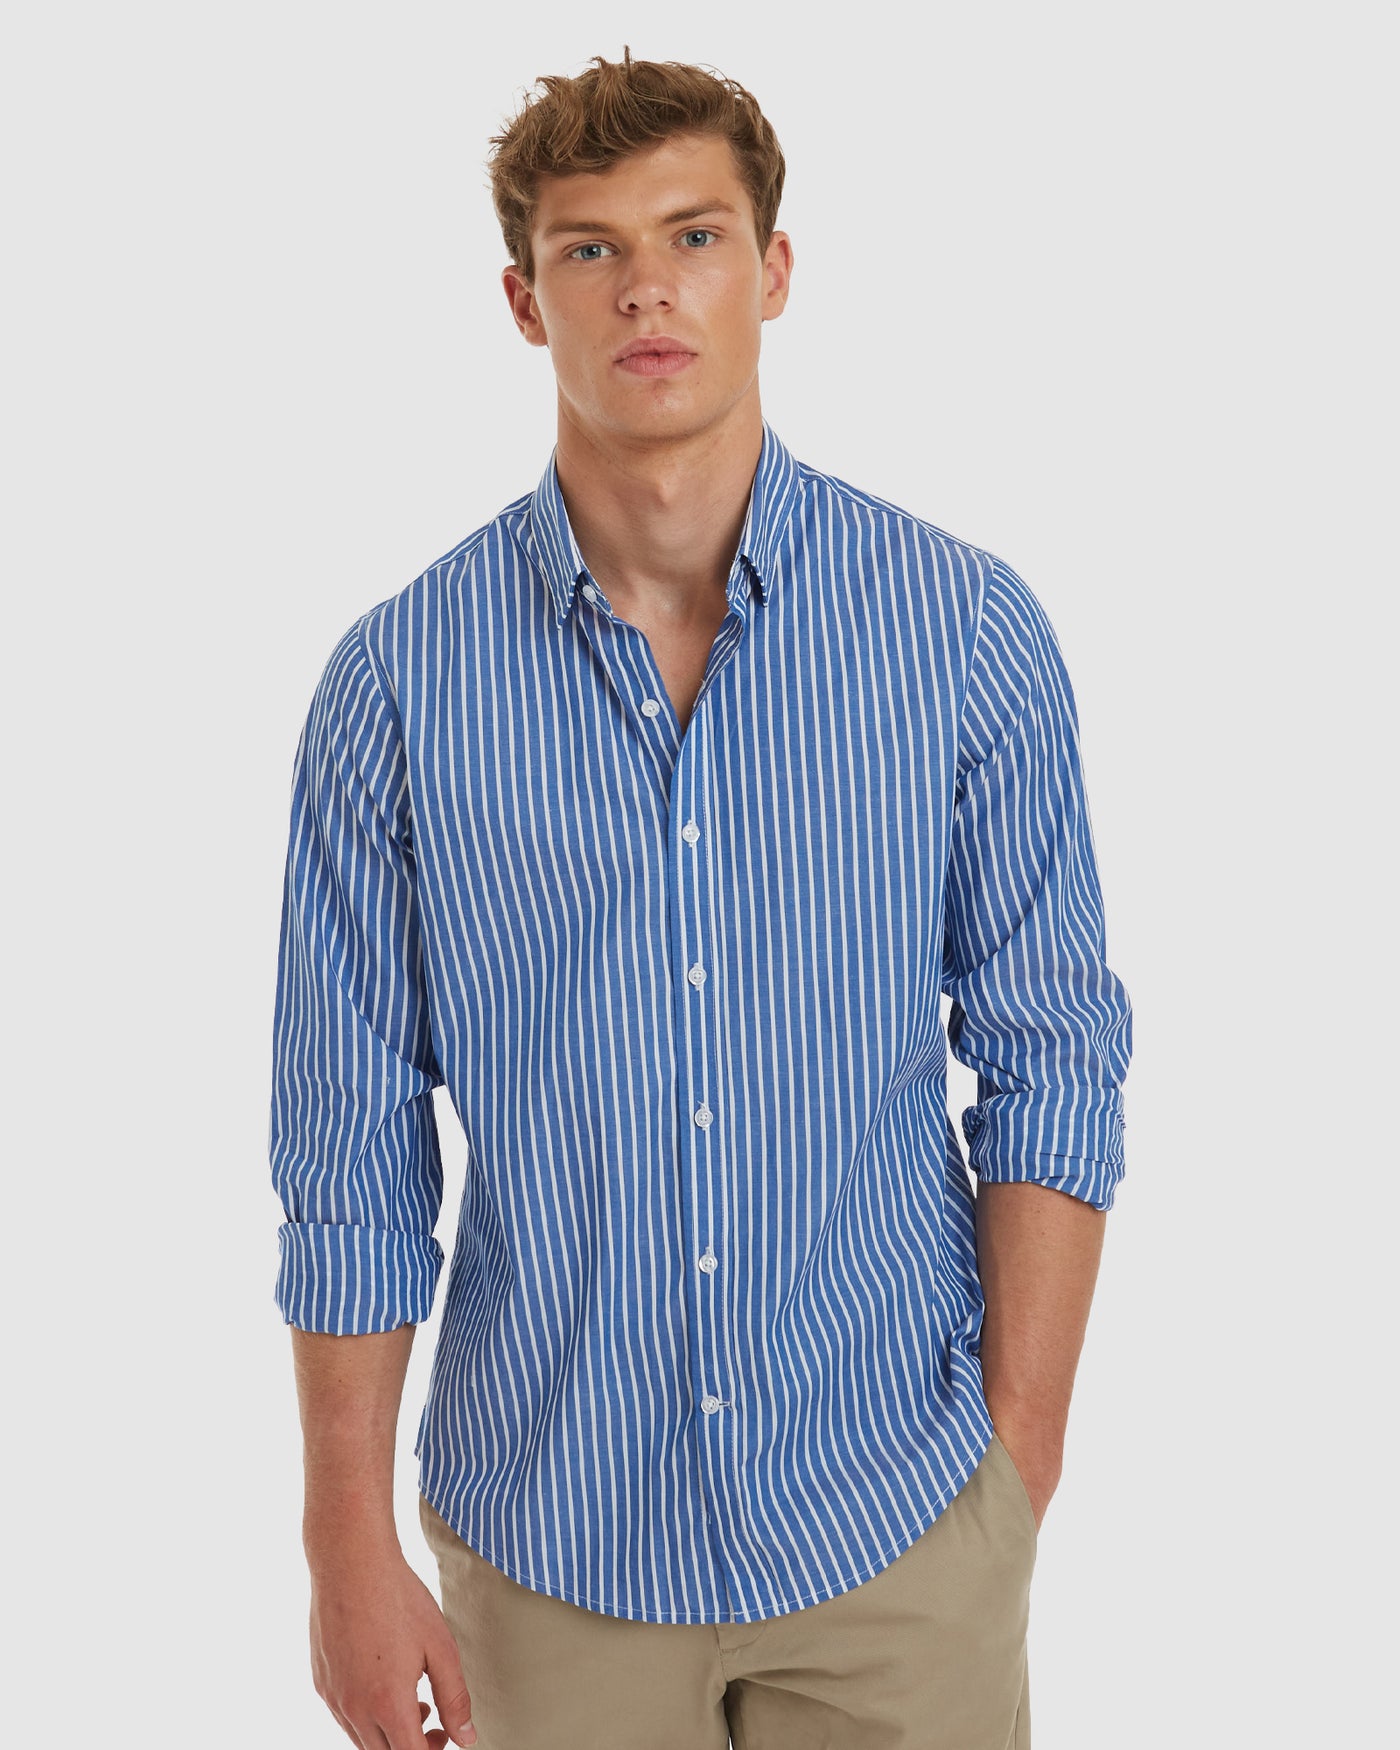 Vegas Blue Stripes Cotton Shirt  - Slim Fit